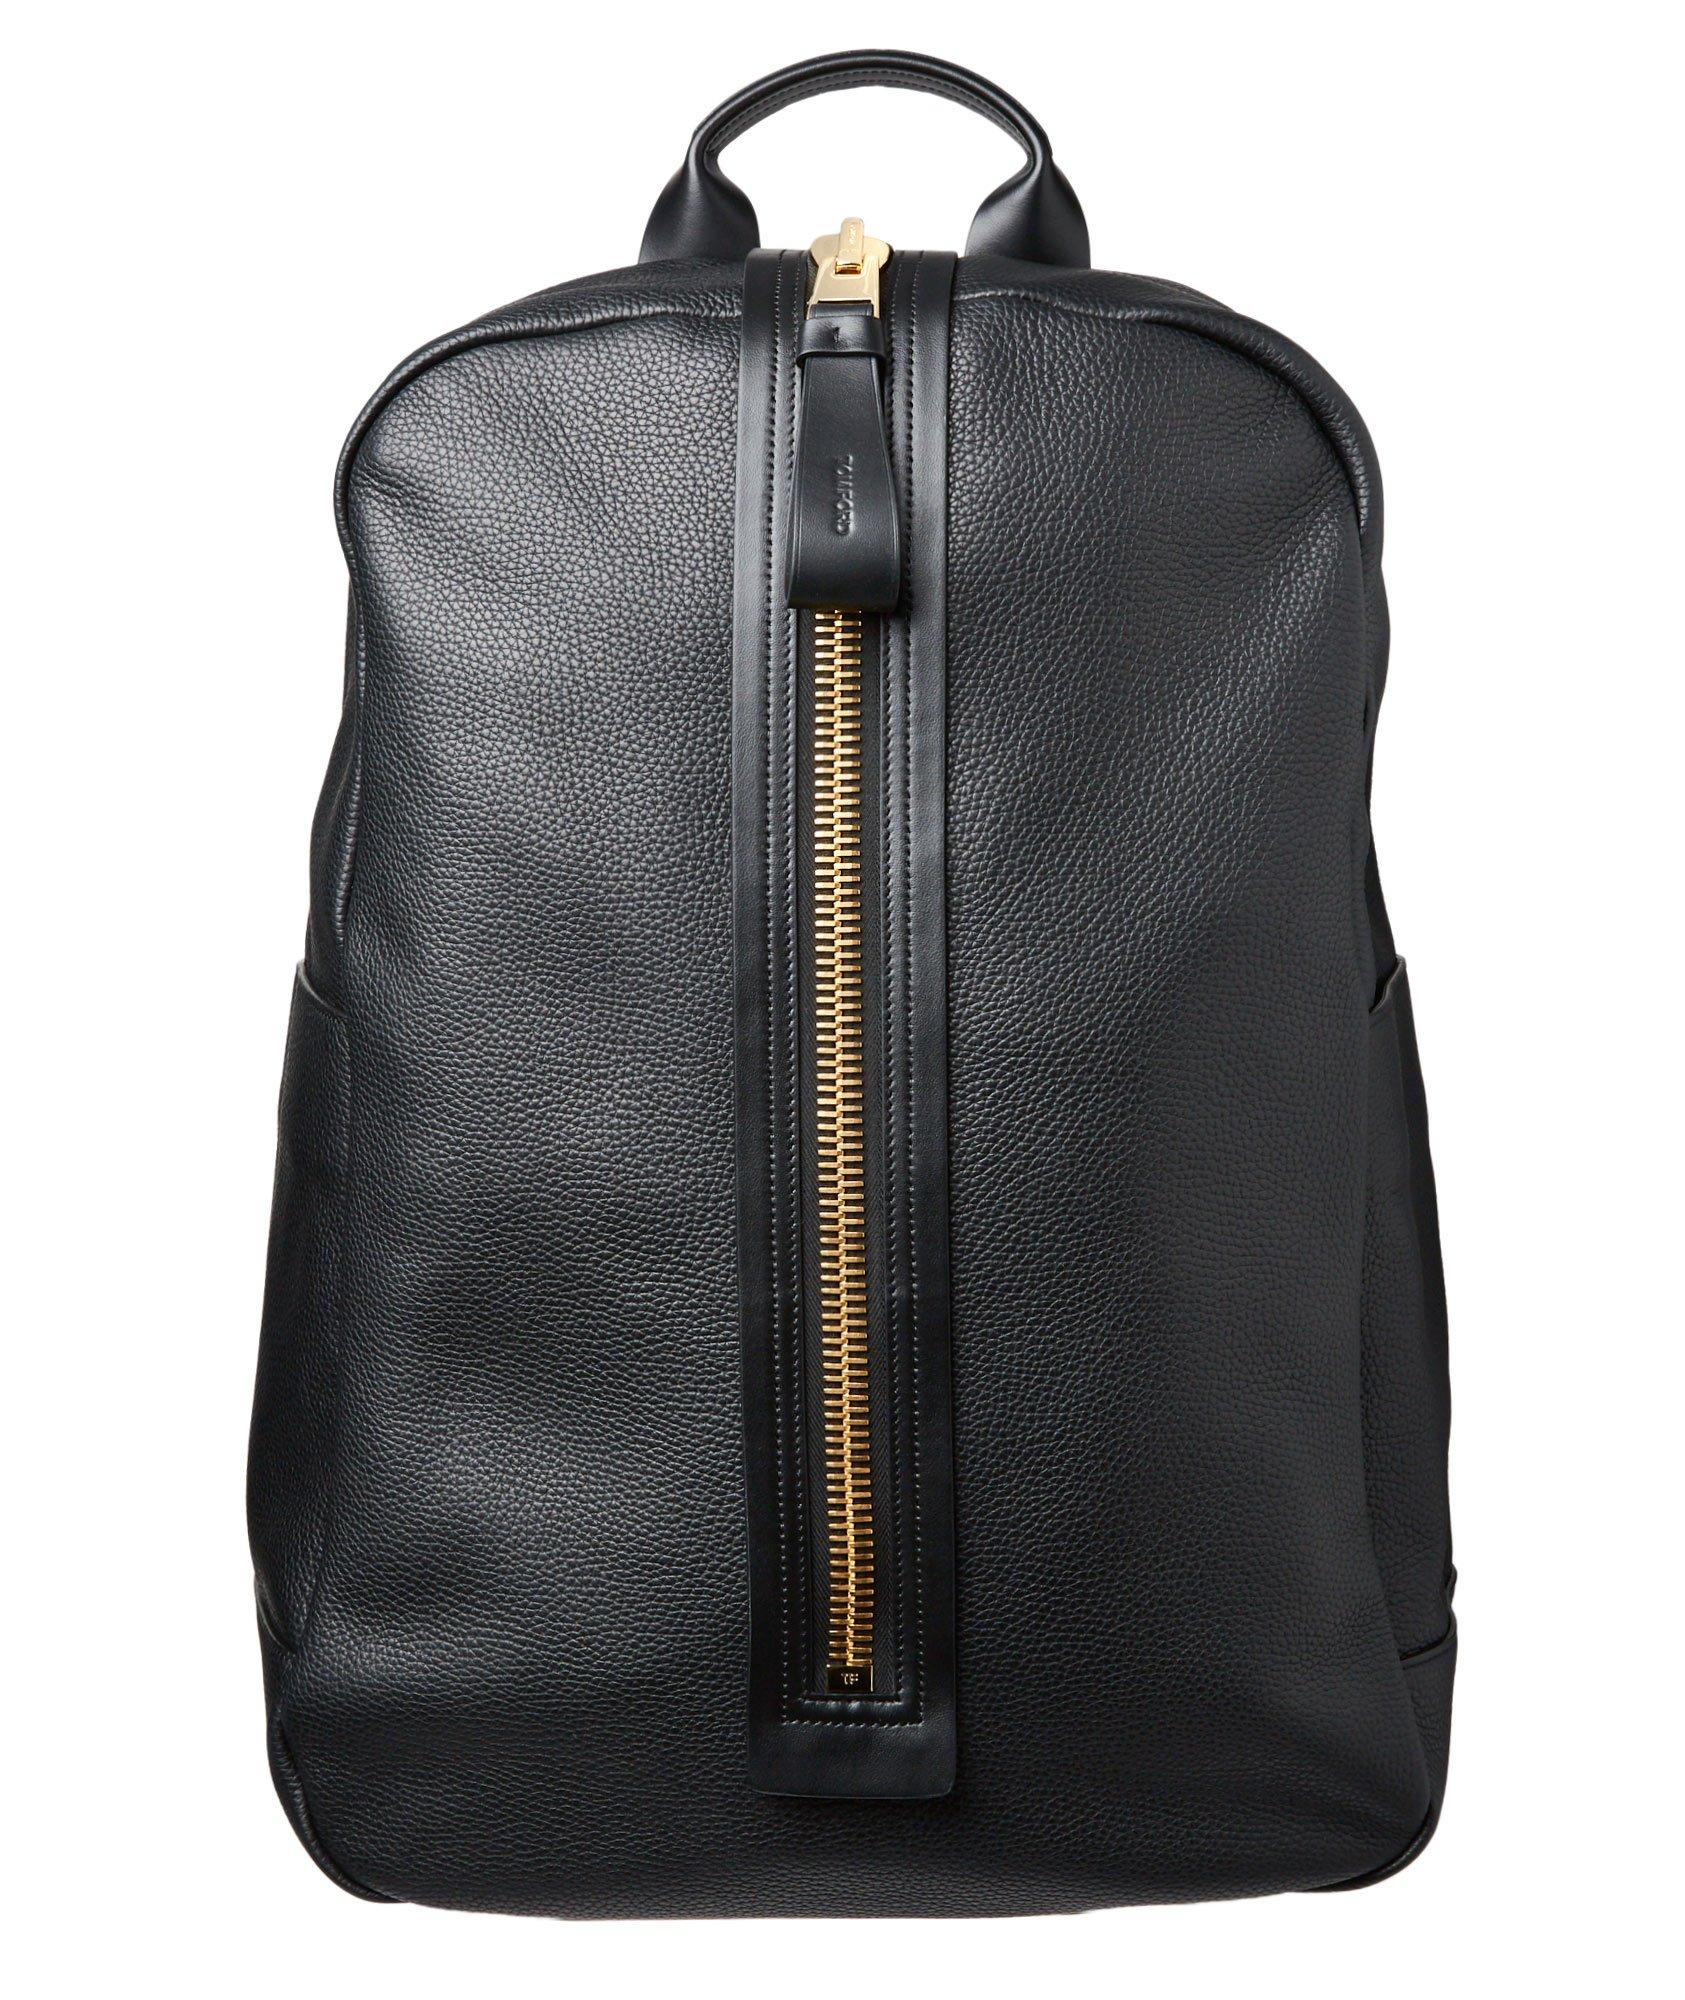 Buckley Zip Leather Backpack image 0